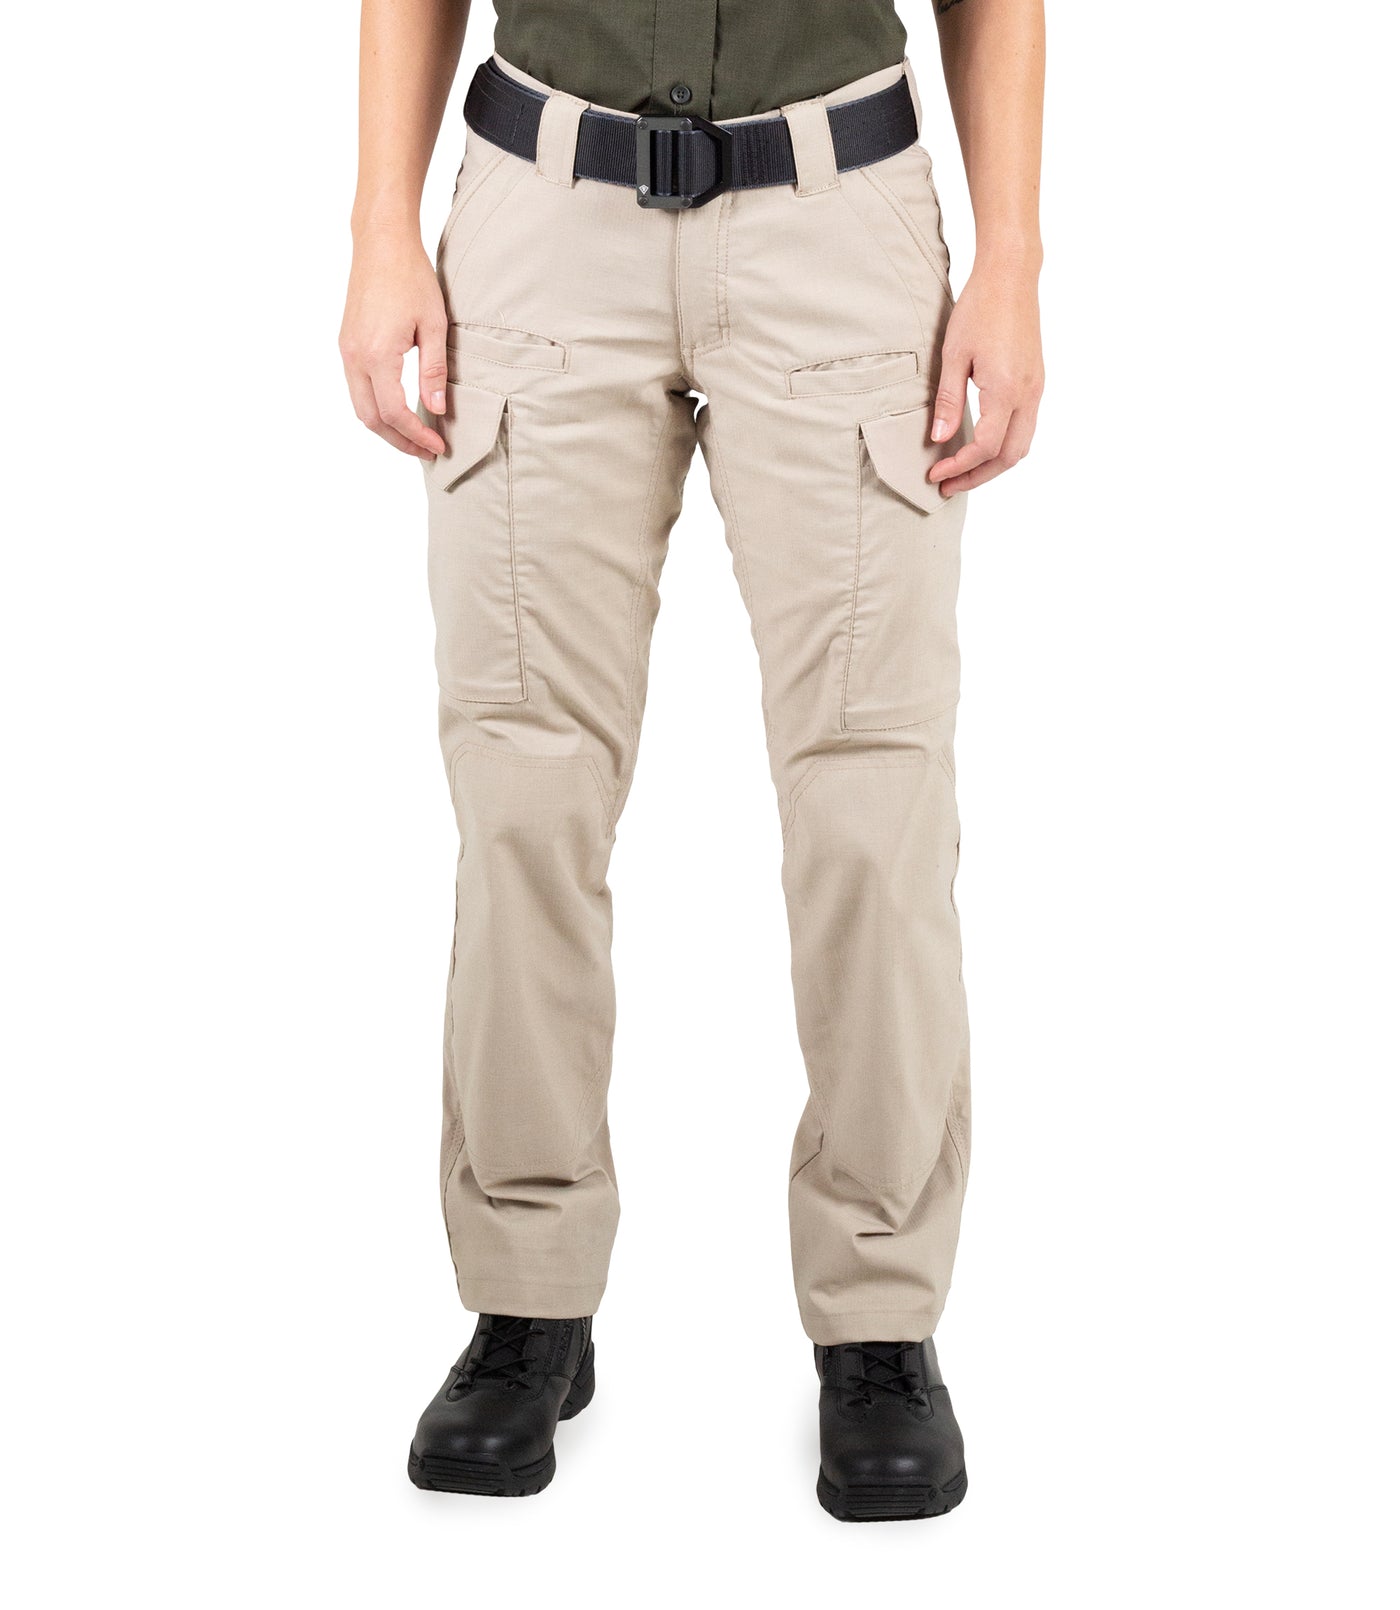 Mens Tactical Cargo Trousers Waterproof Hiking Military Combat Outdoor Pants  | eBay